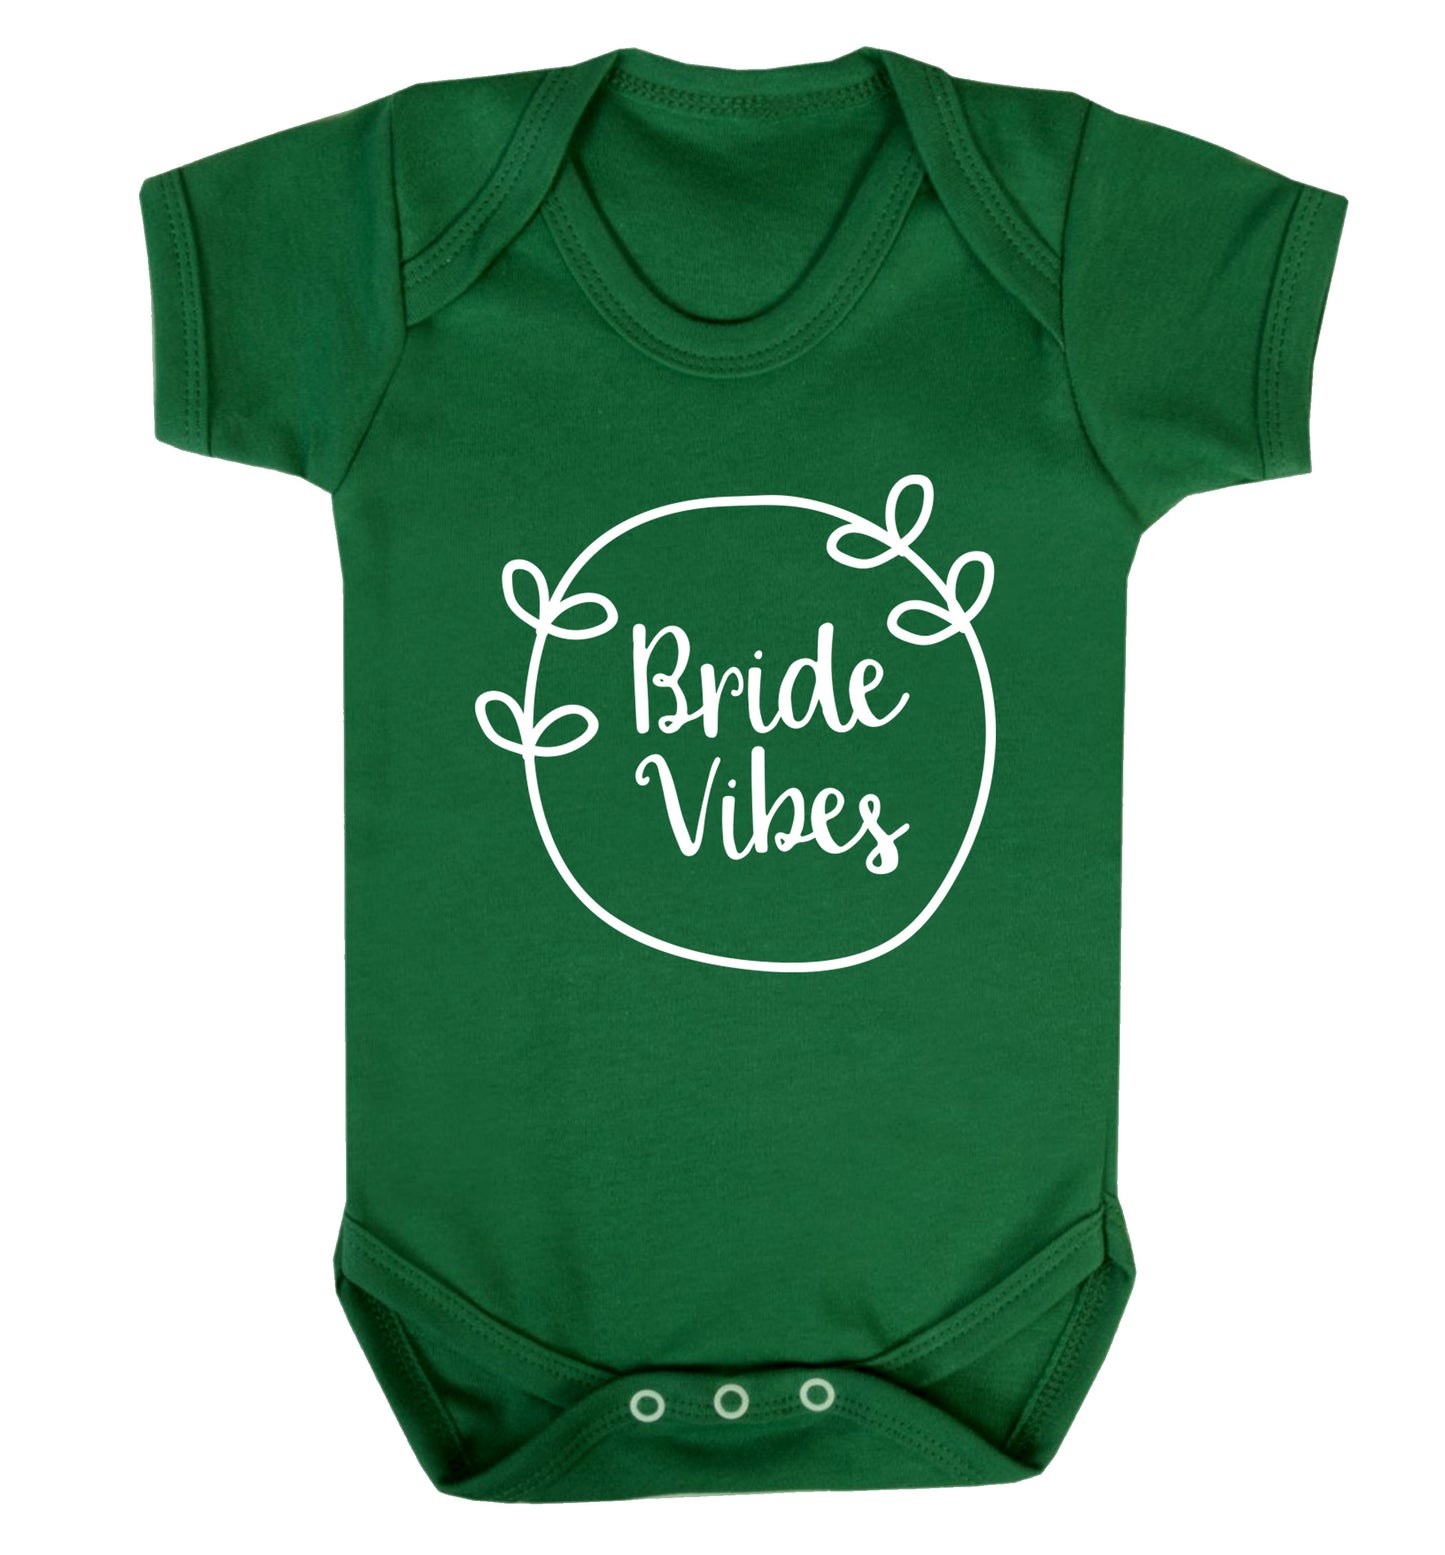 Bride Vibes Baby Vest green 18-24 months